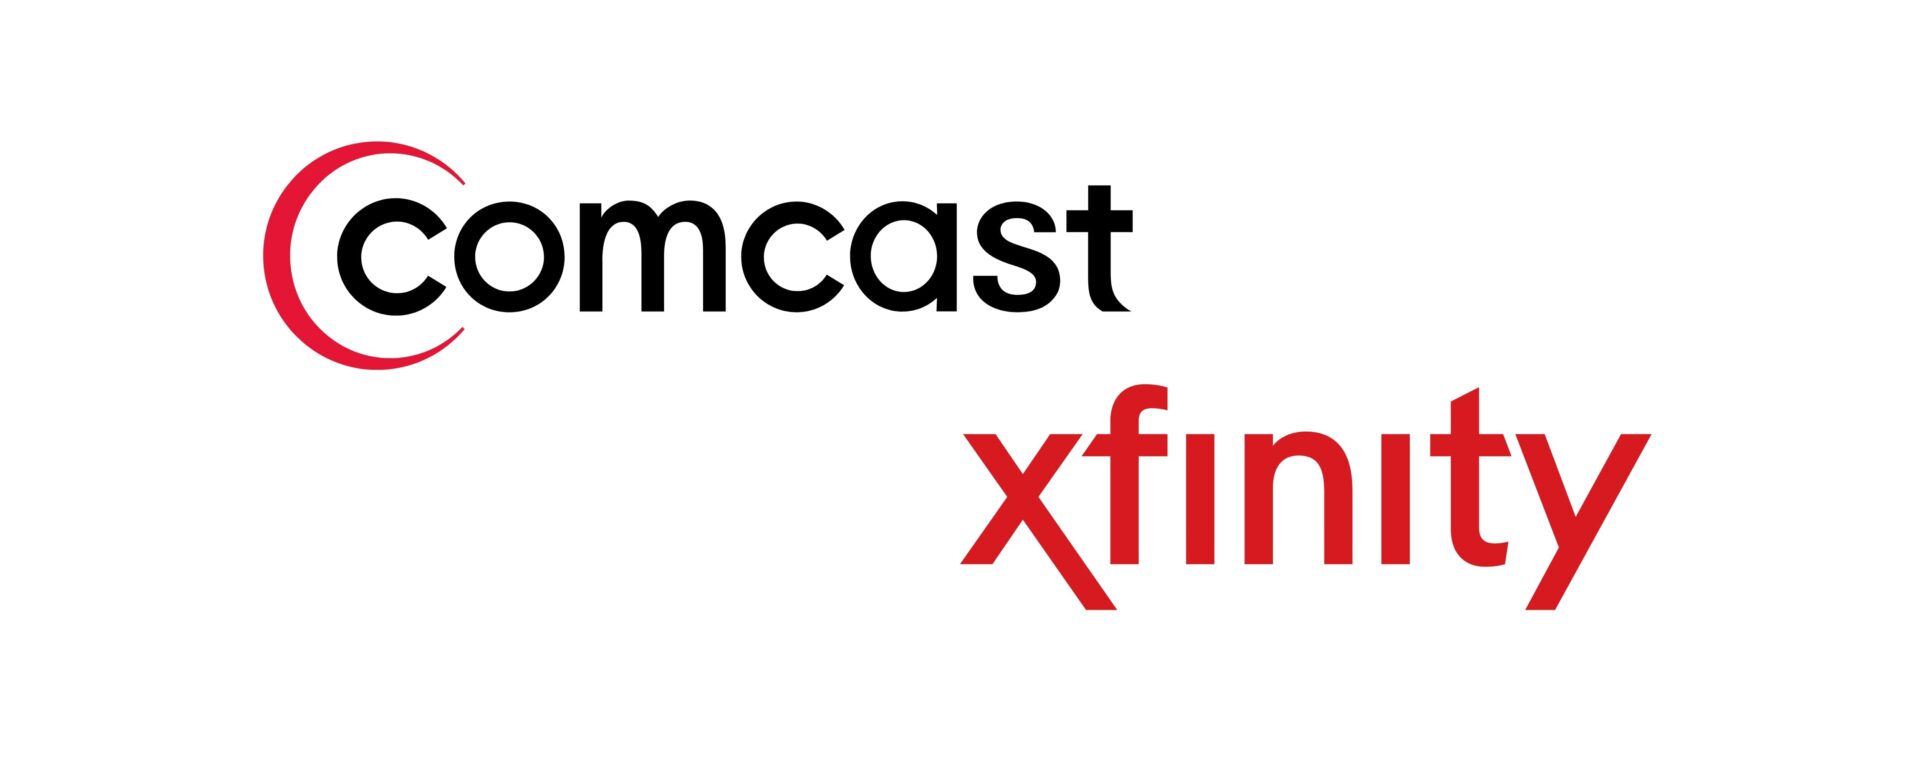 Comcast - Xfinity logo after rebranding